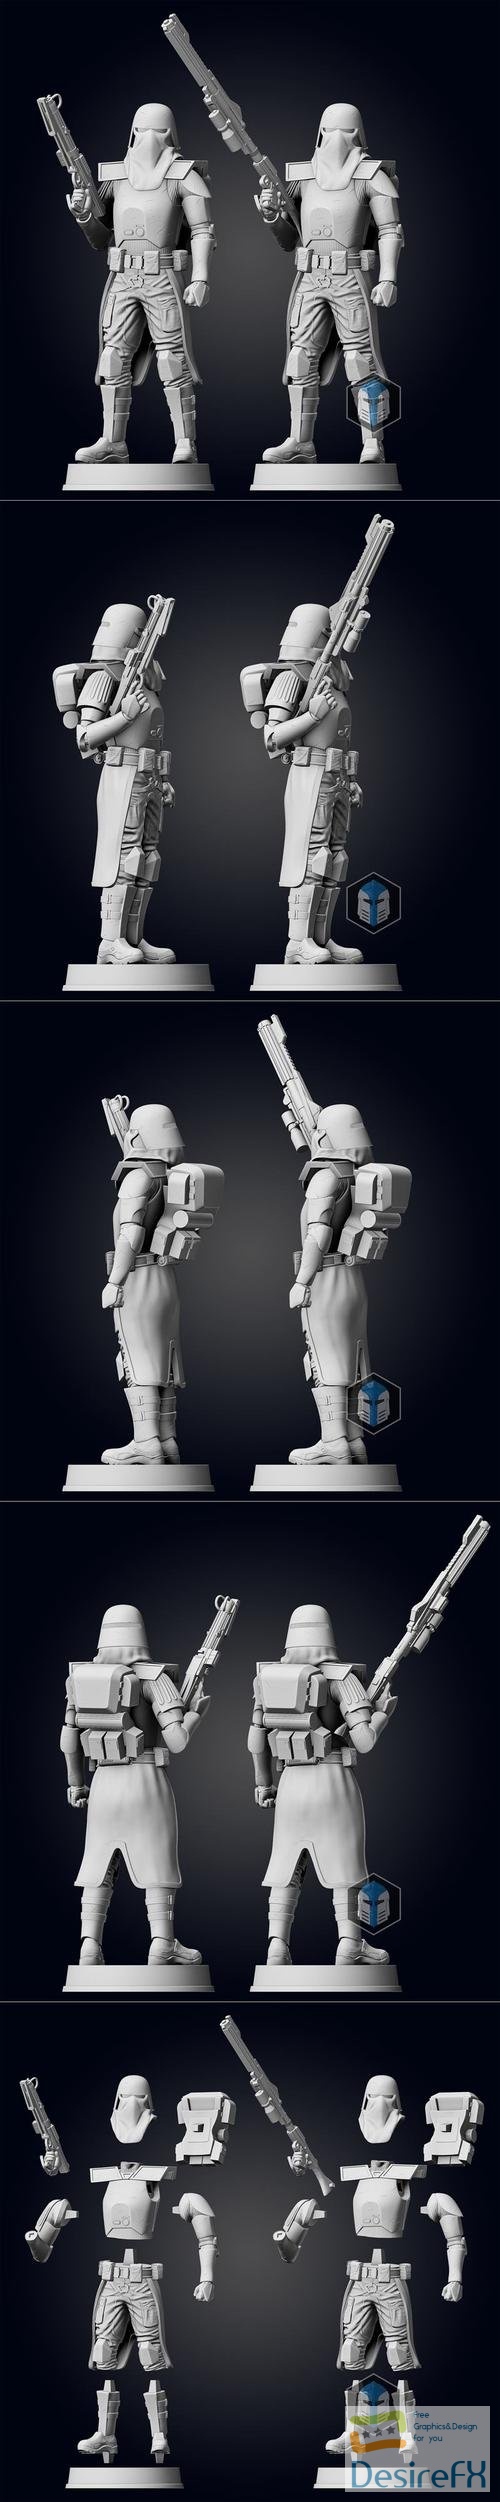 Galactic Marine Figurine - Pose 3 – 3D Print